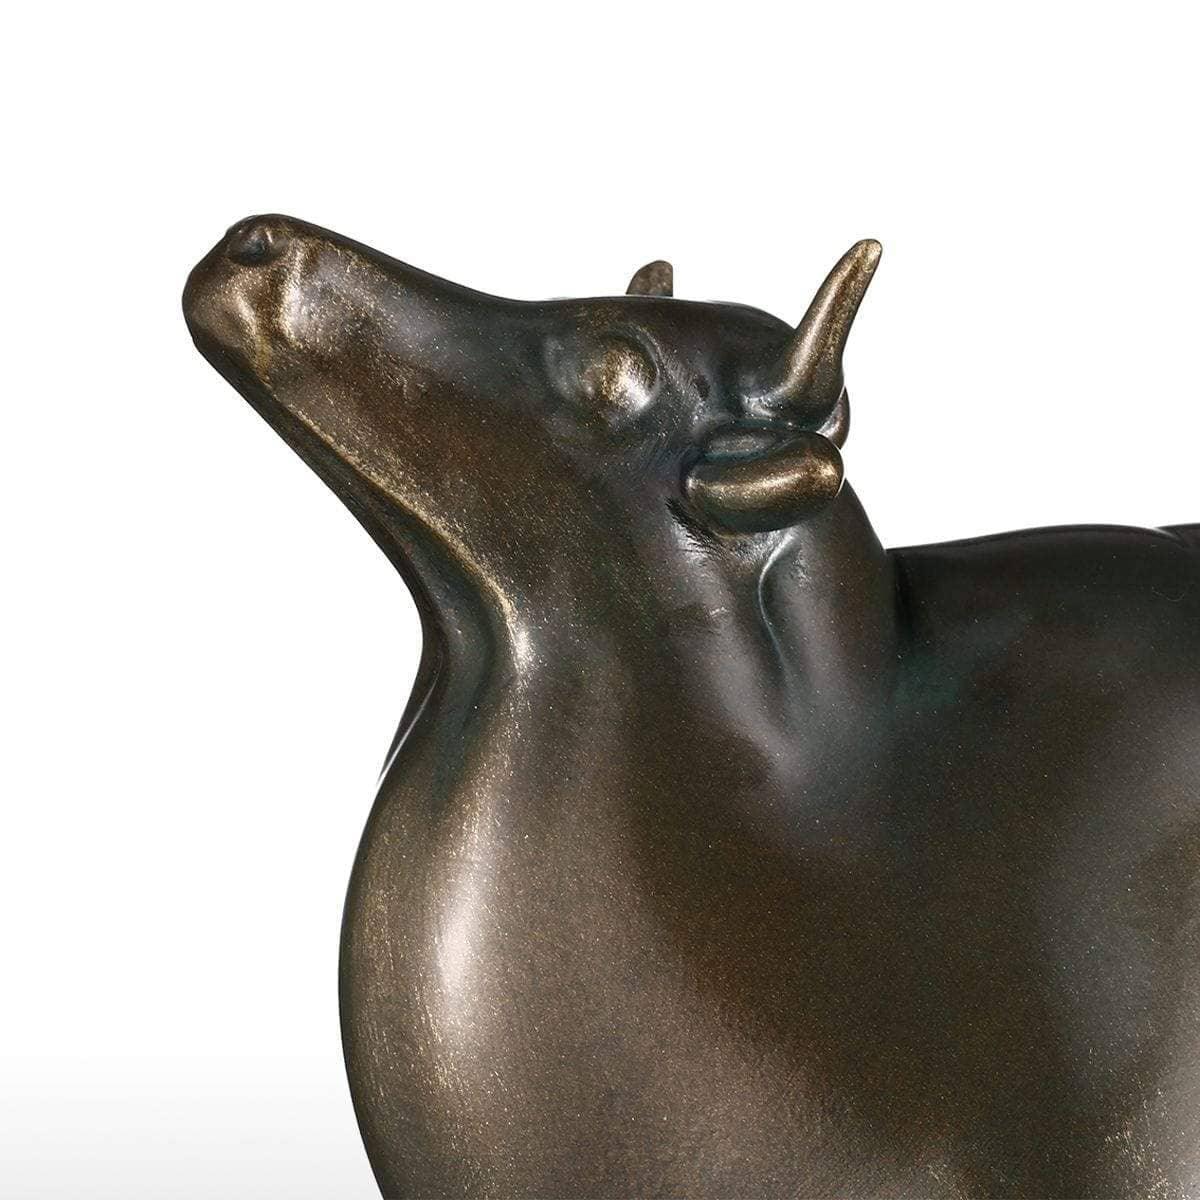 Sculptural Modern Cattle Home Decor: A Unique Statement Piece